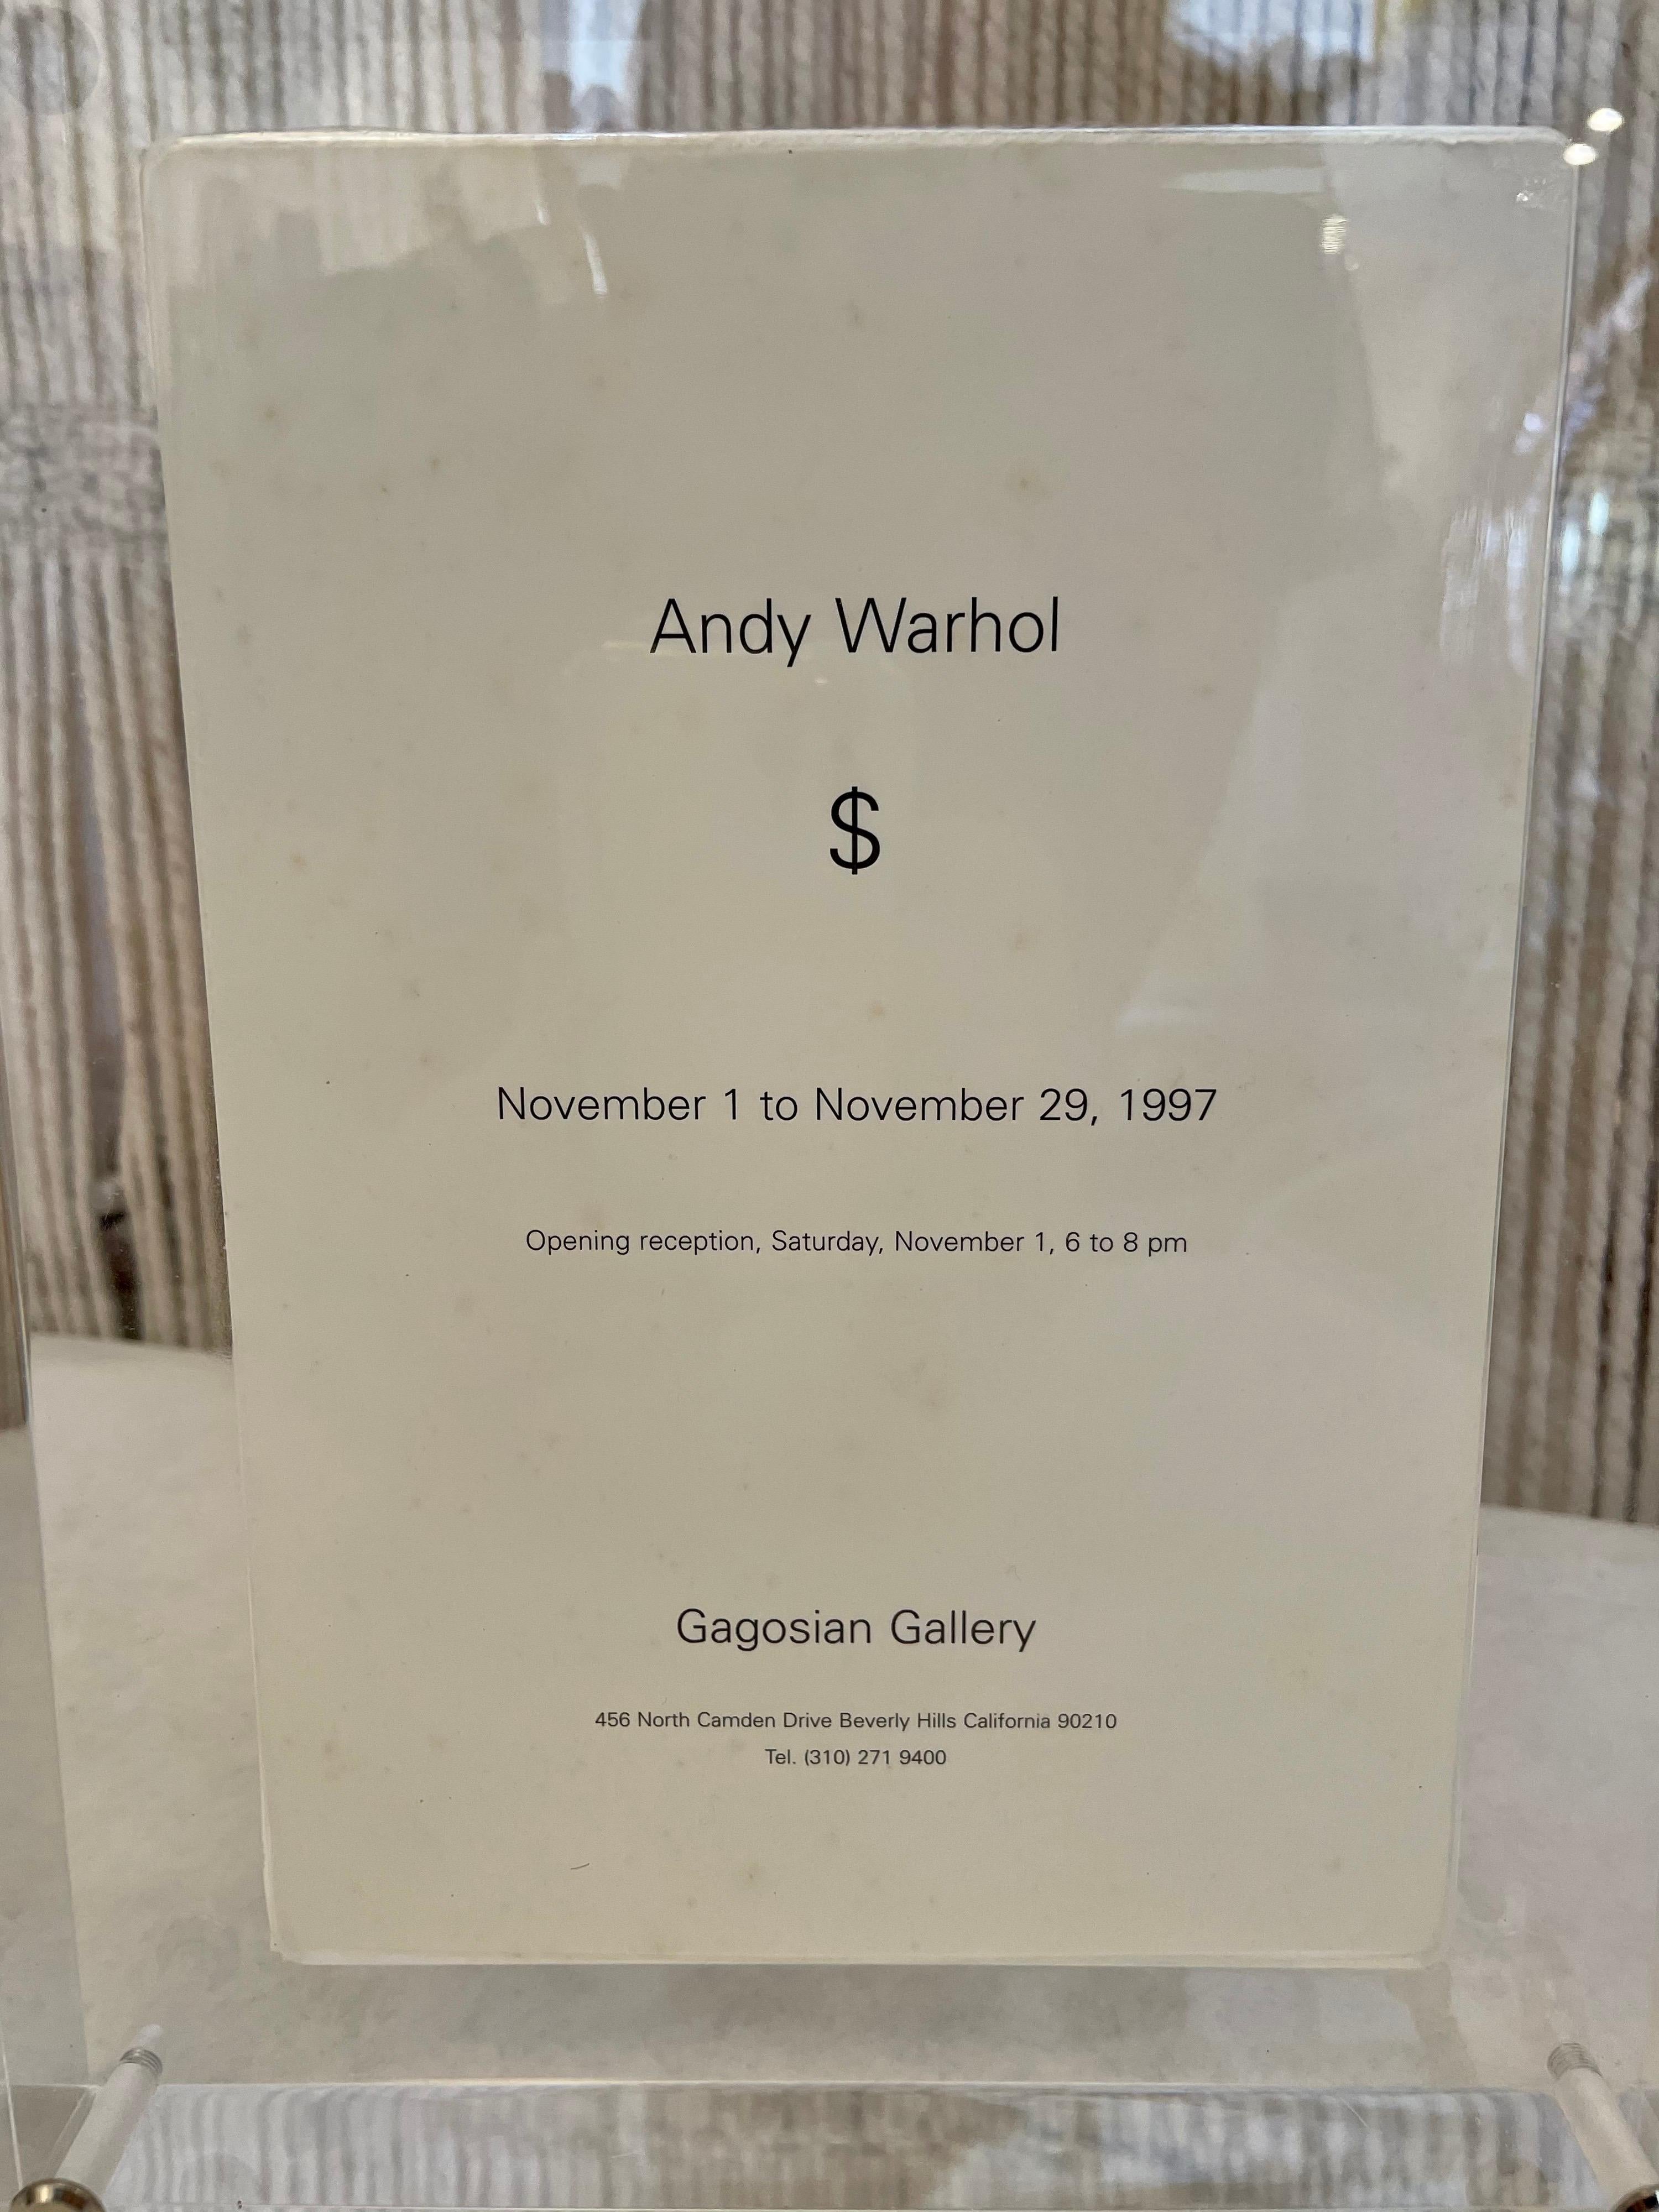 Post-Modern Acrylic Block Sculpture of Gagosian Gallery's Andy Warhol Exhibit Invitation